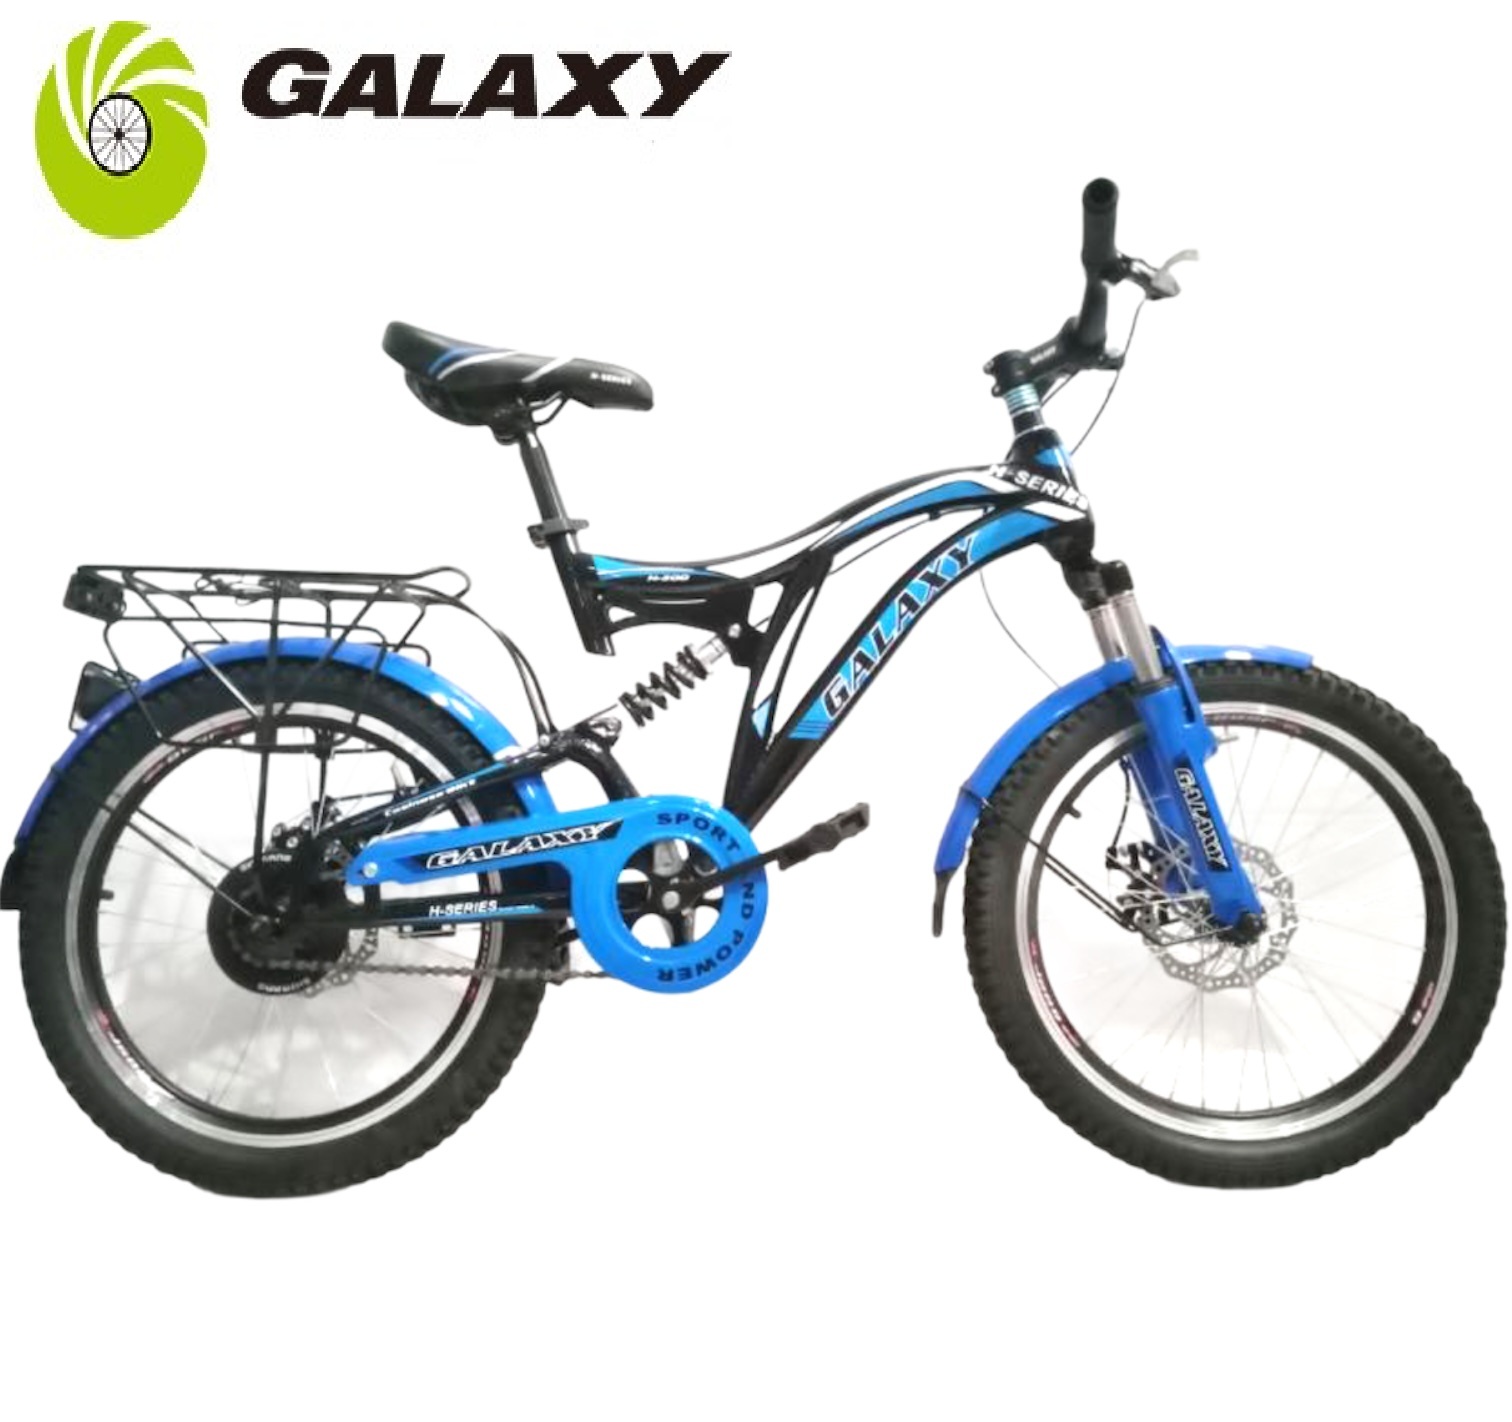 galaxy mountain bike